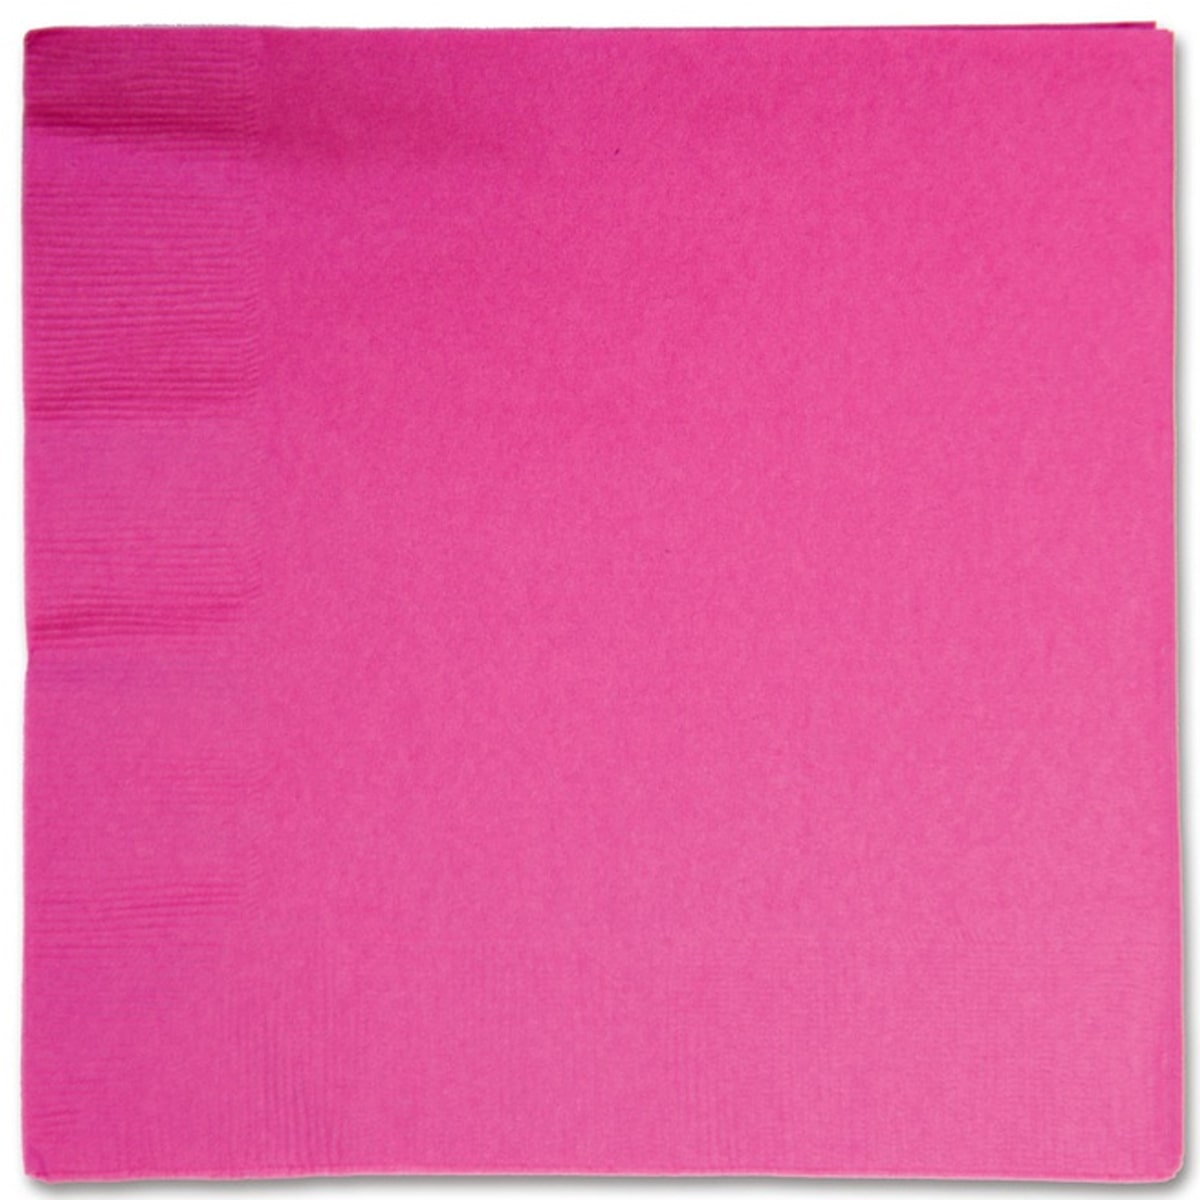 1502-1092 А Серветки яскраво-рожеві Bright Pink 33 см 16 шт